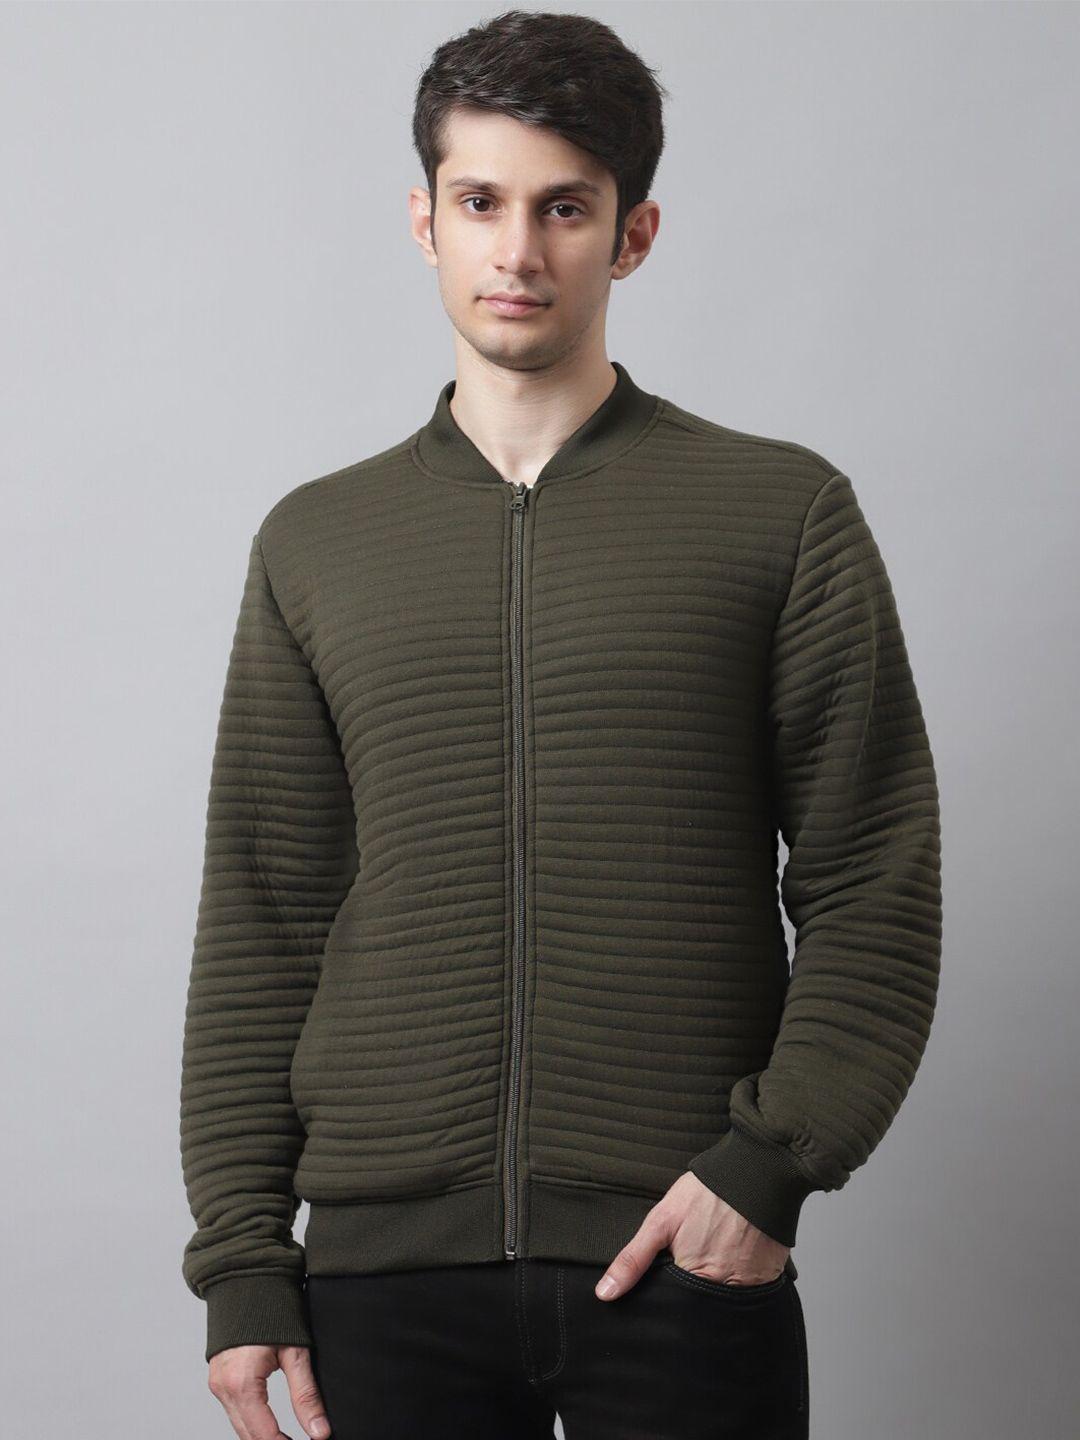 house of vedas self designed long sleeves front-open fleece sweatshirt